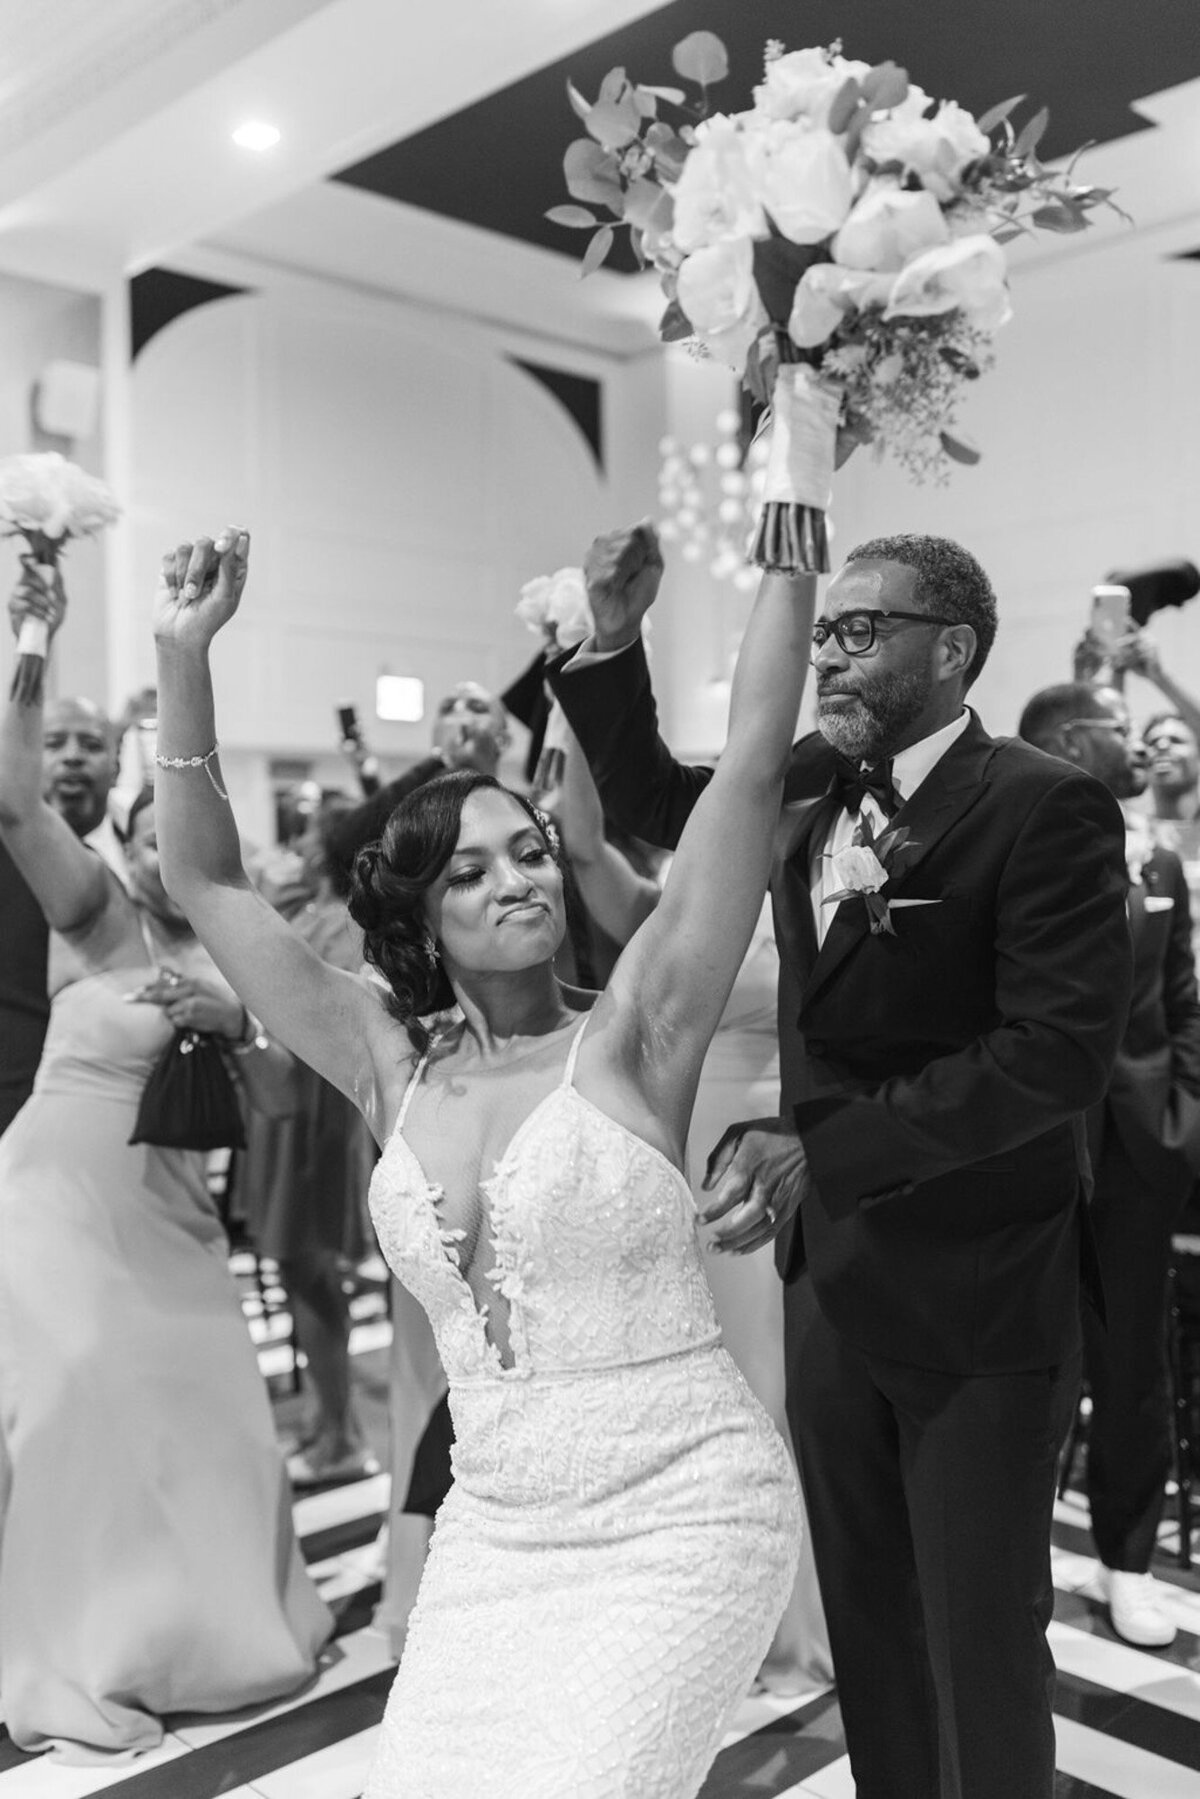 Tanya and Dustin bride and groom at luxury downtown chicago wedding dancing on dancefloor